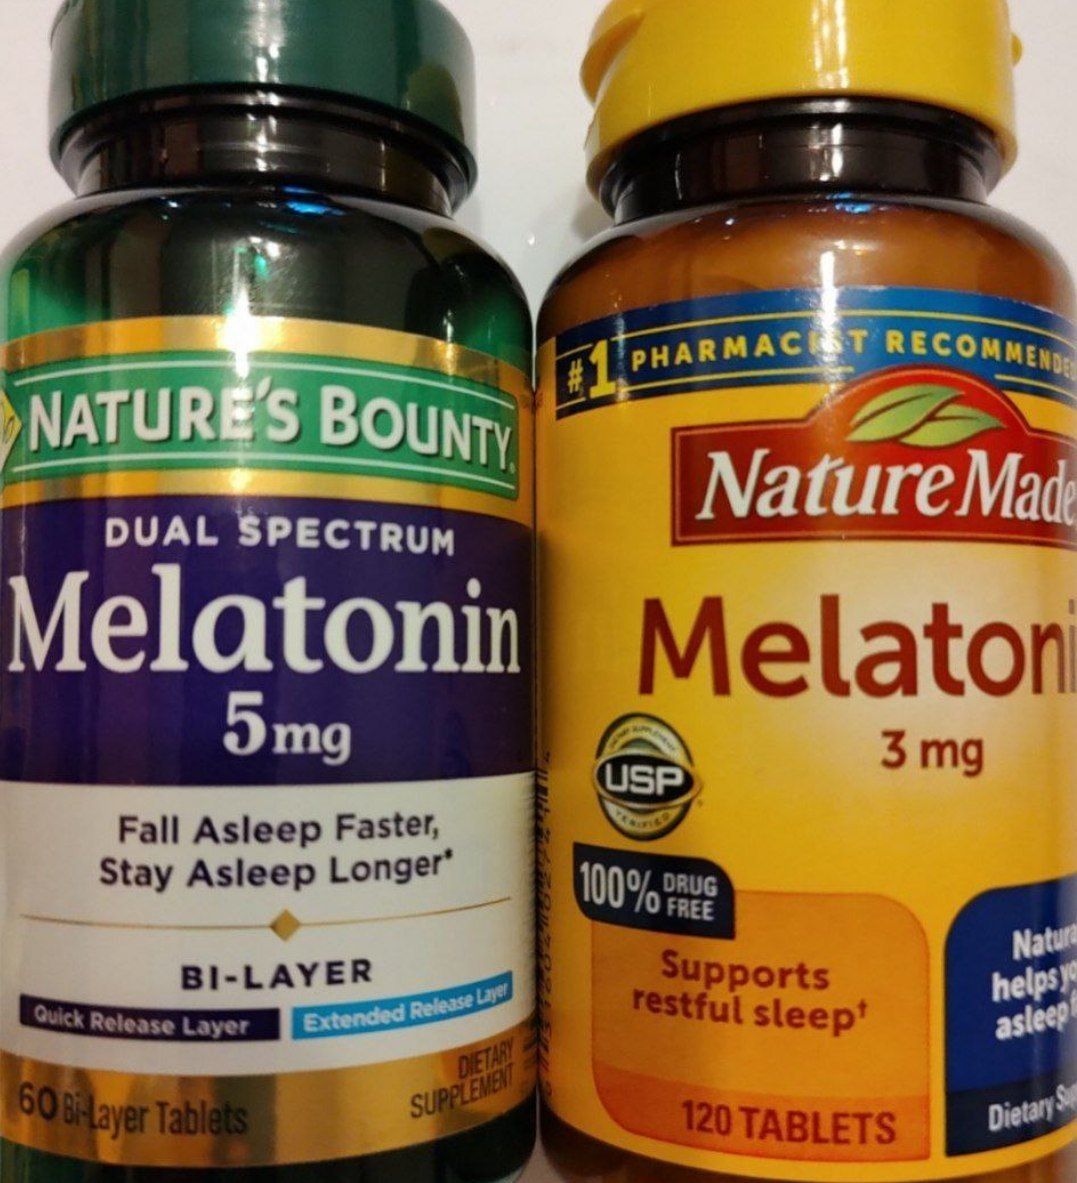 Мелатонин витамин молодости, здоровый сон, антиоксидант цинк, B6, A, E